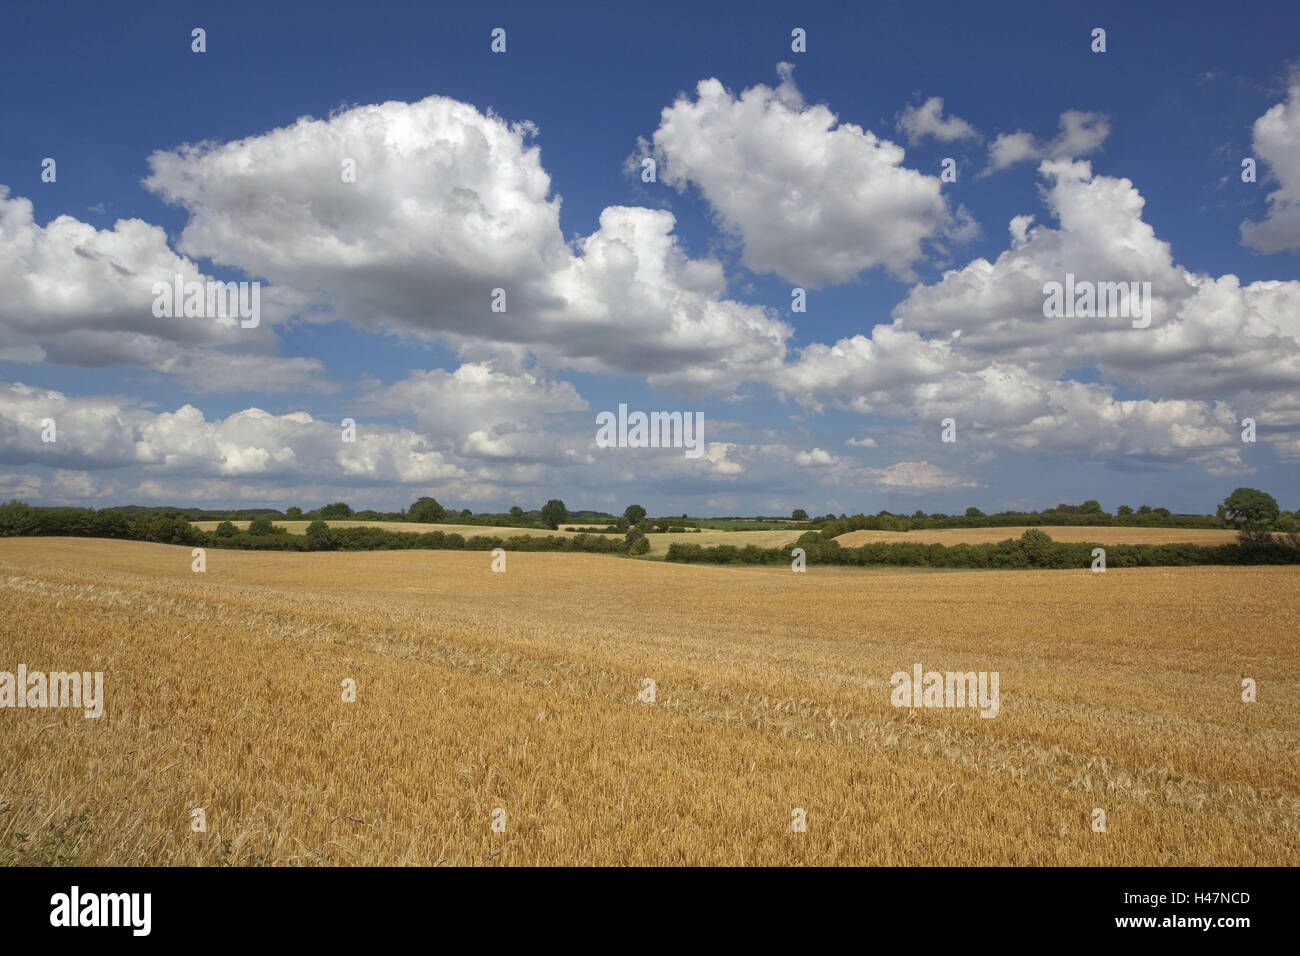 Germany, Schleswig - Holstein, region angling, grain-field, Stock Photo